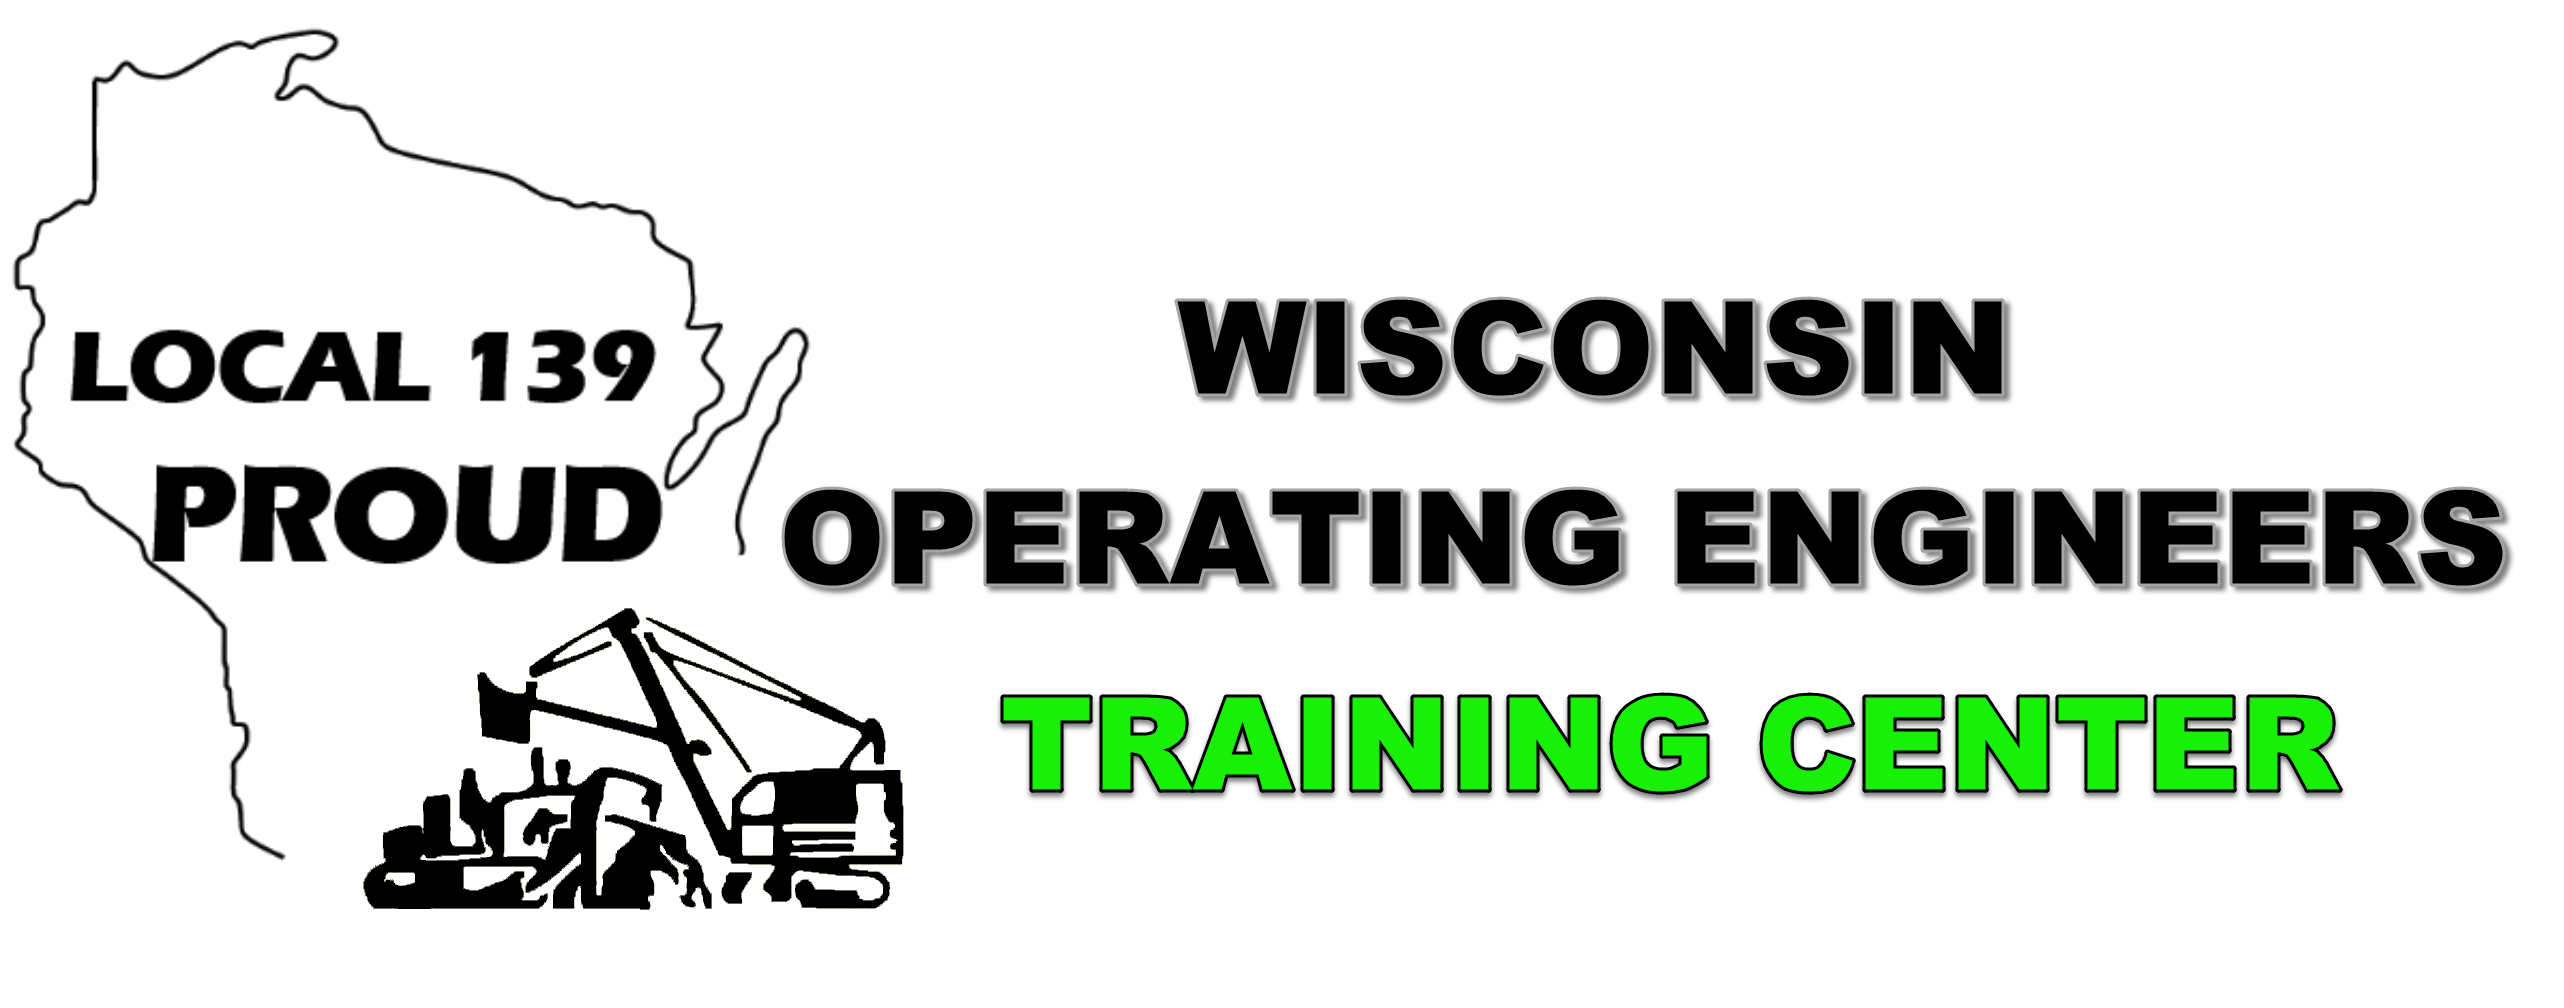 Wisconsin Operating Engineers